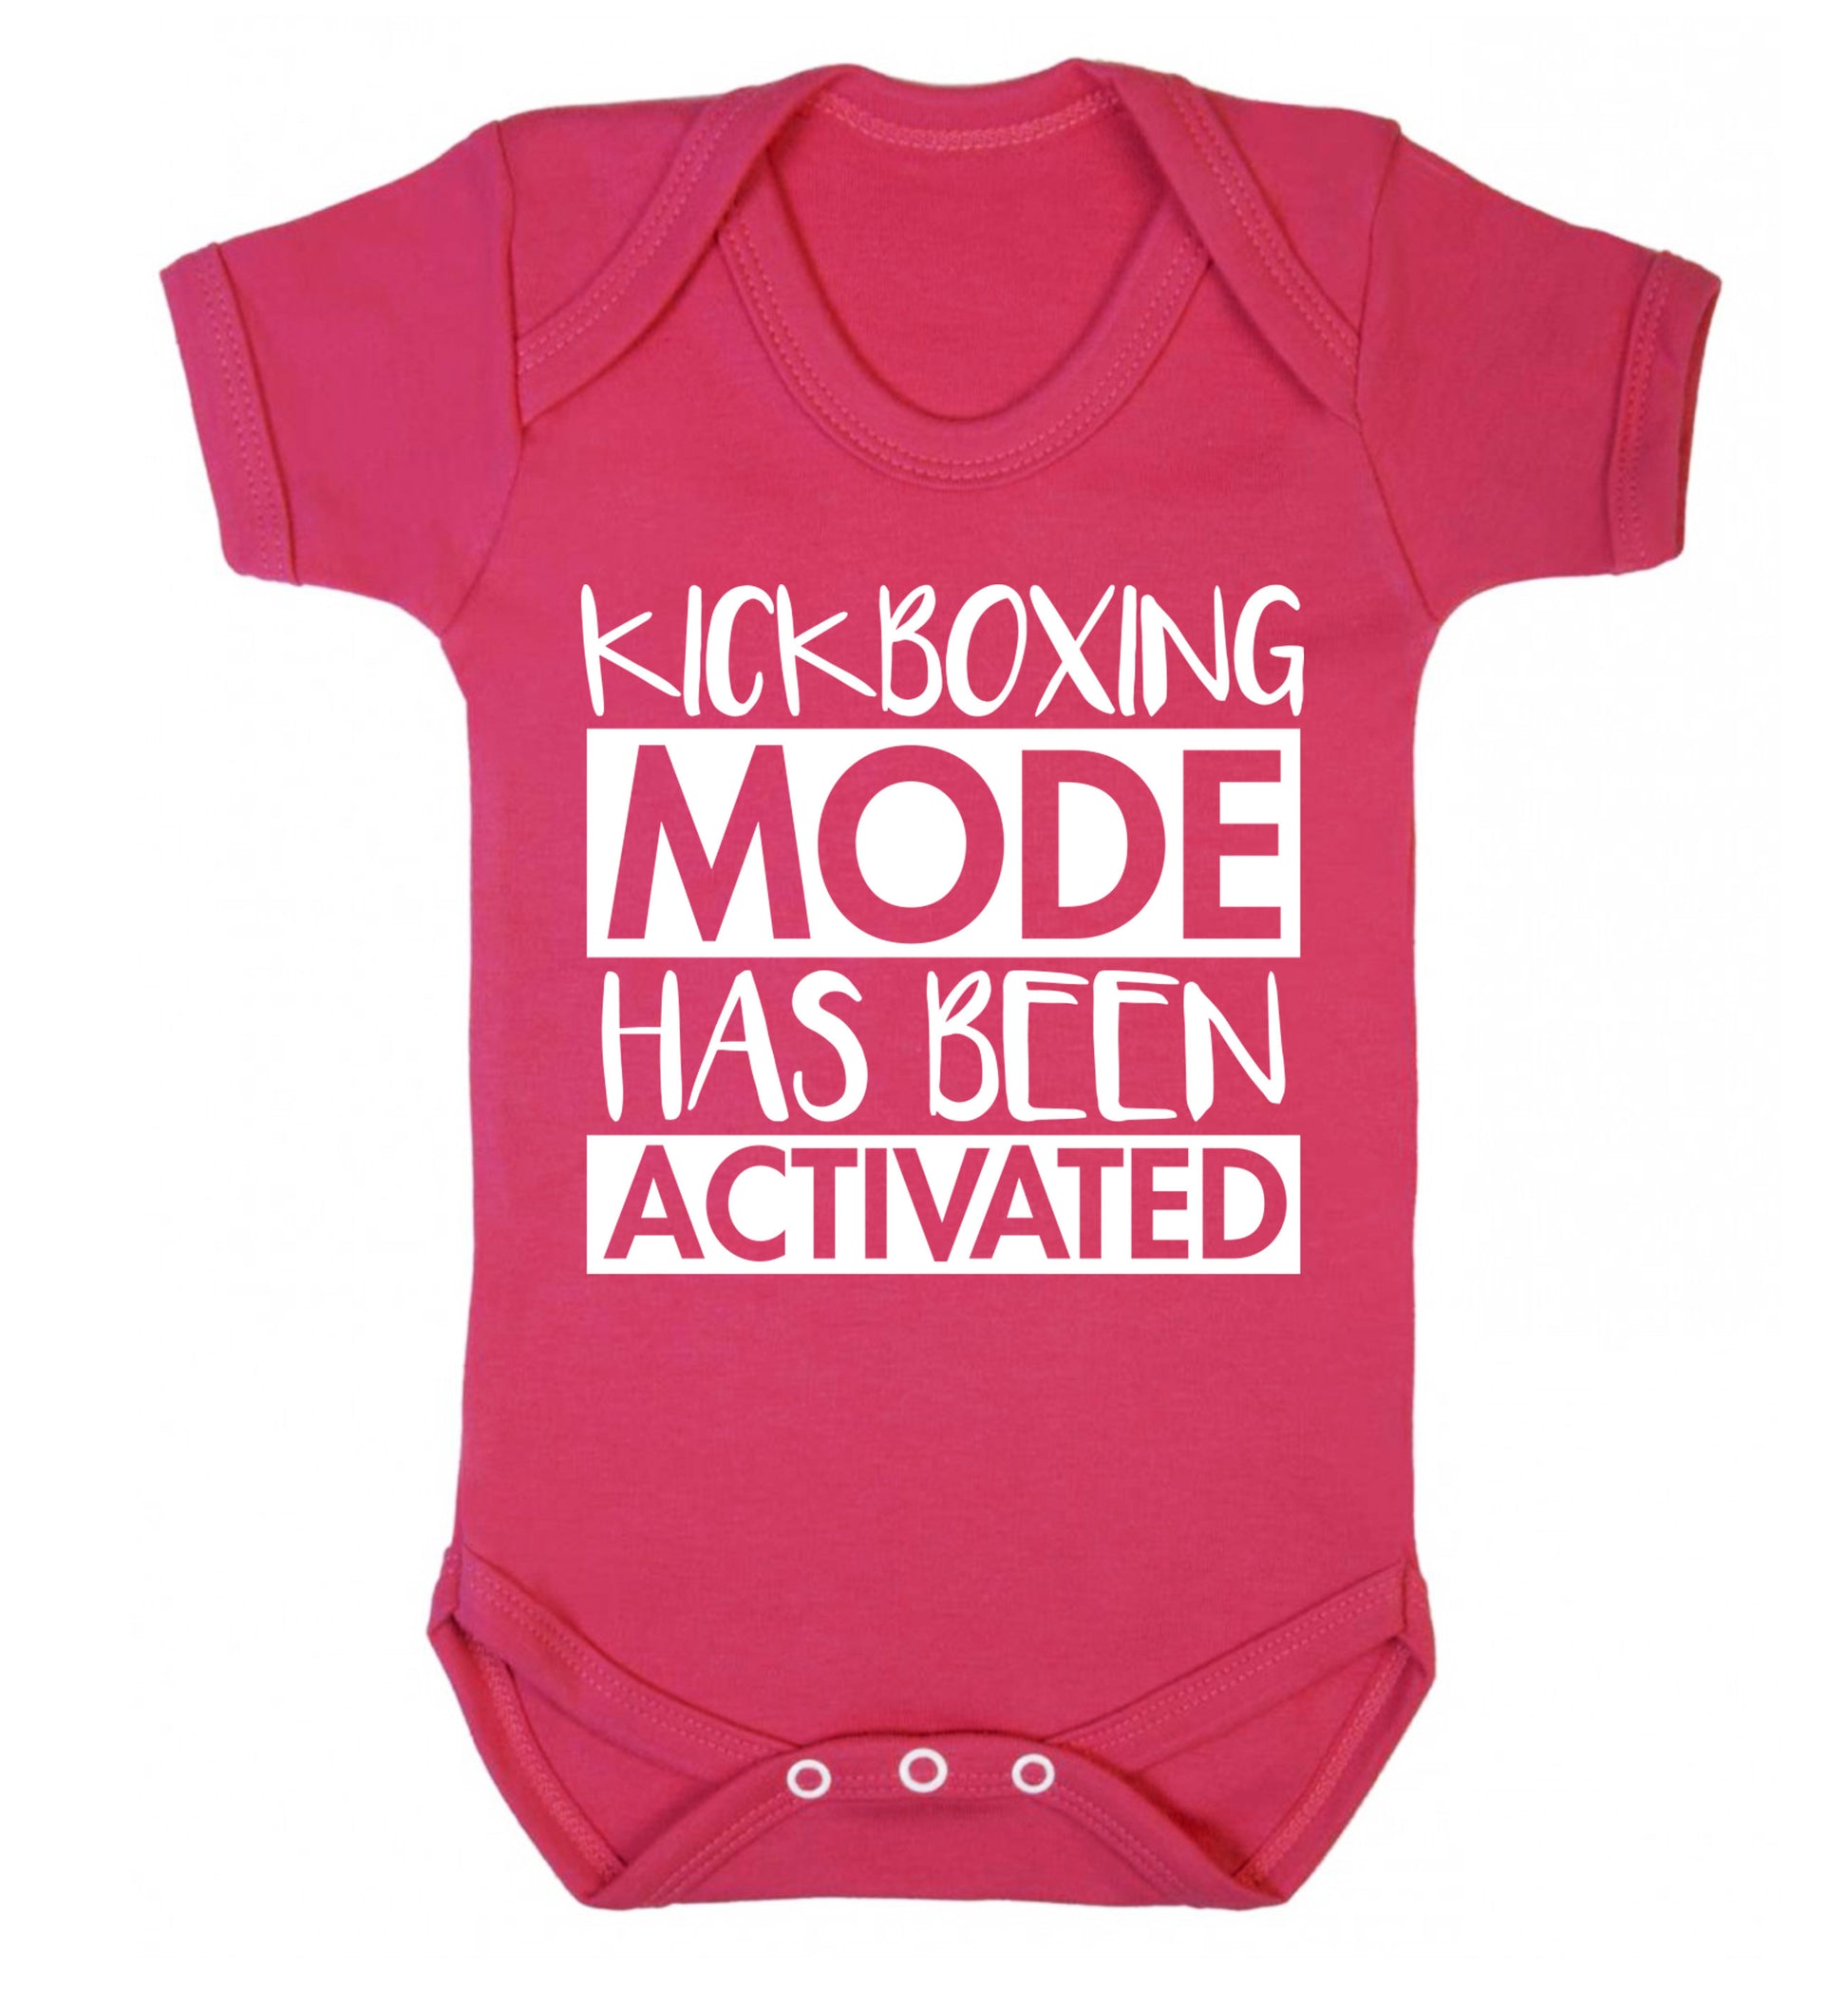 Kickboxing mode activated Baby Vest dark pink 18-24 months